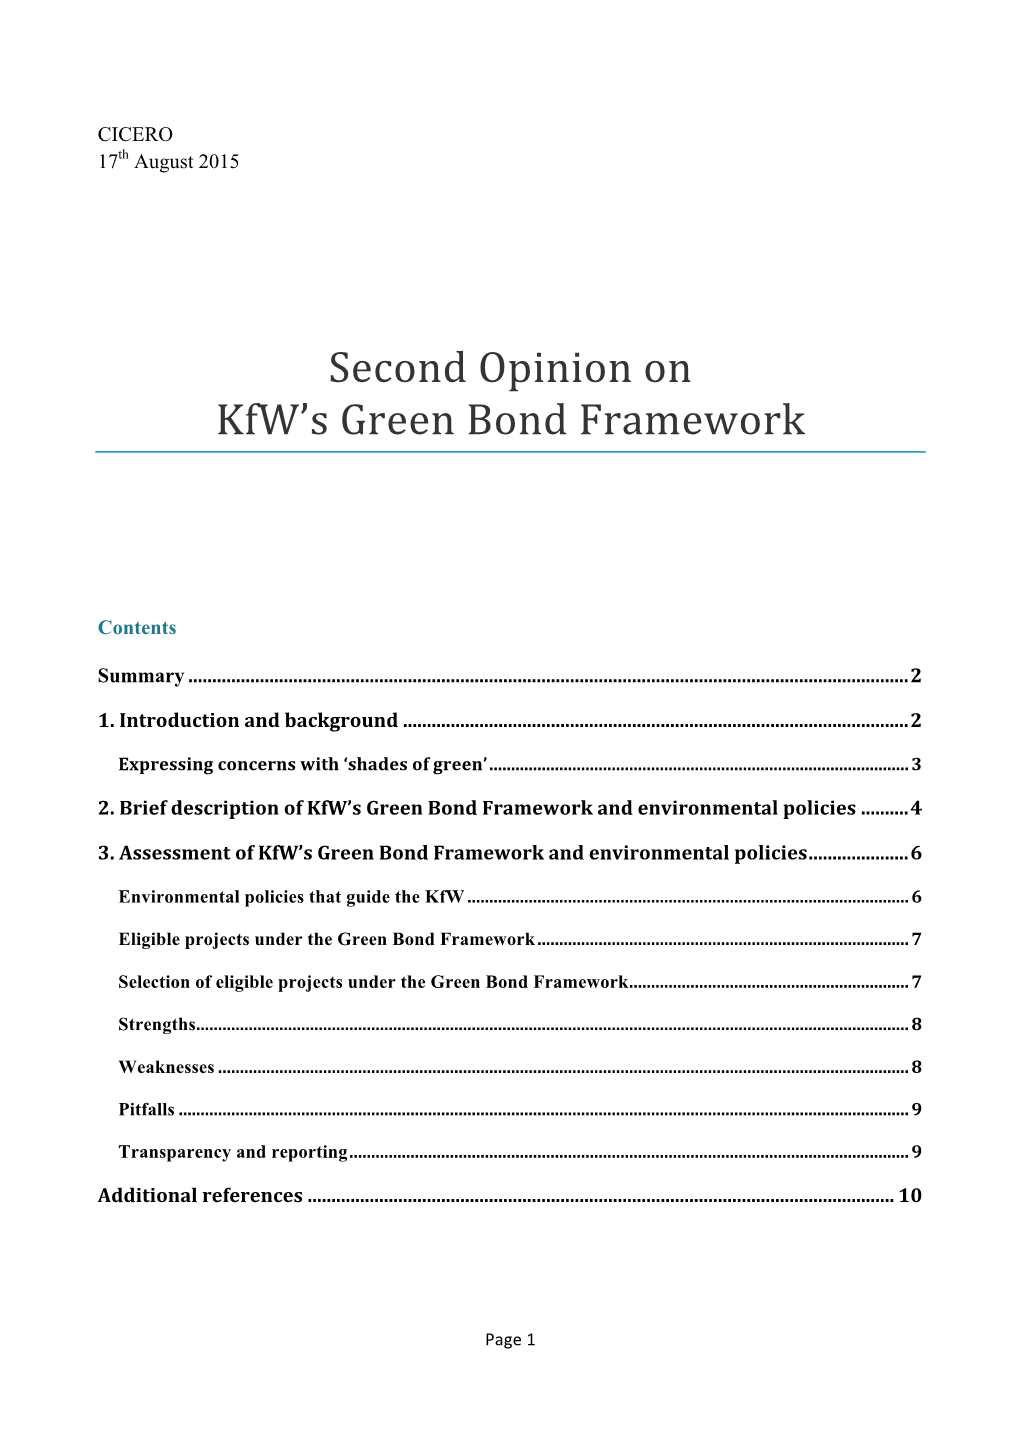 Second Opinion on Kfw's Green Bond Framework